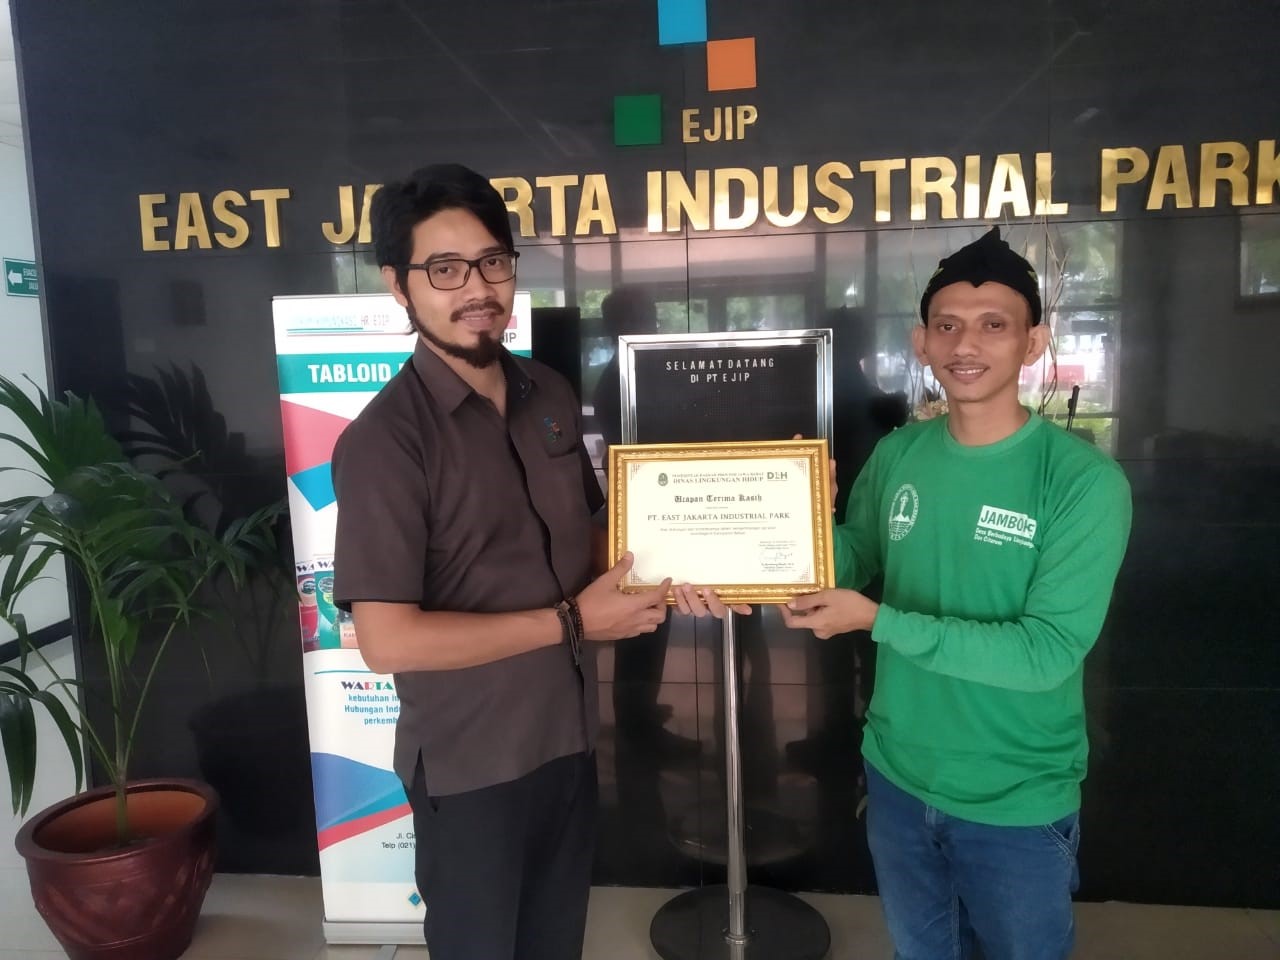 Support Ecovillage, Dinas Lingkungan Hidup give awards to EJIP